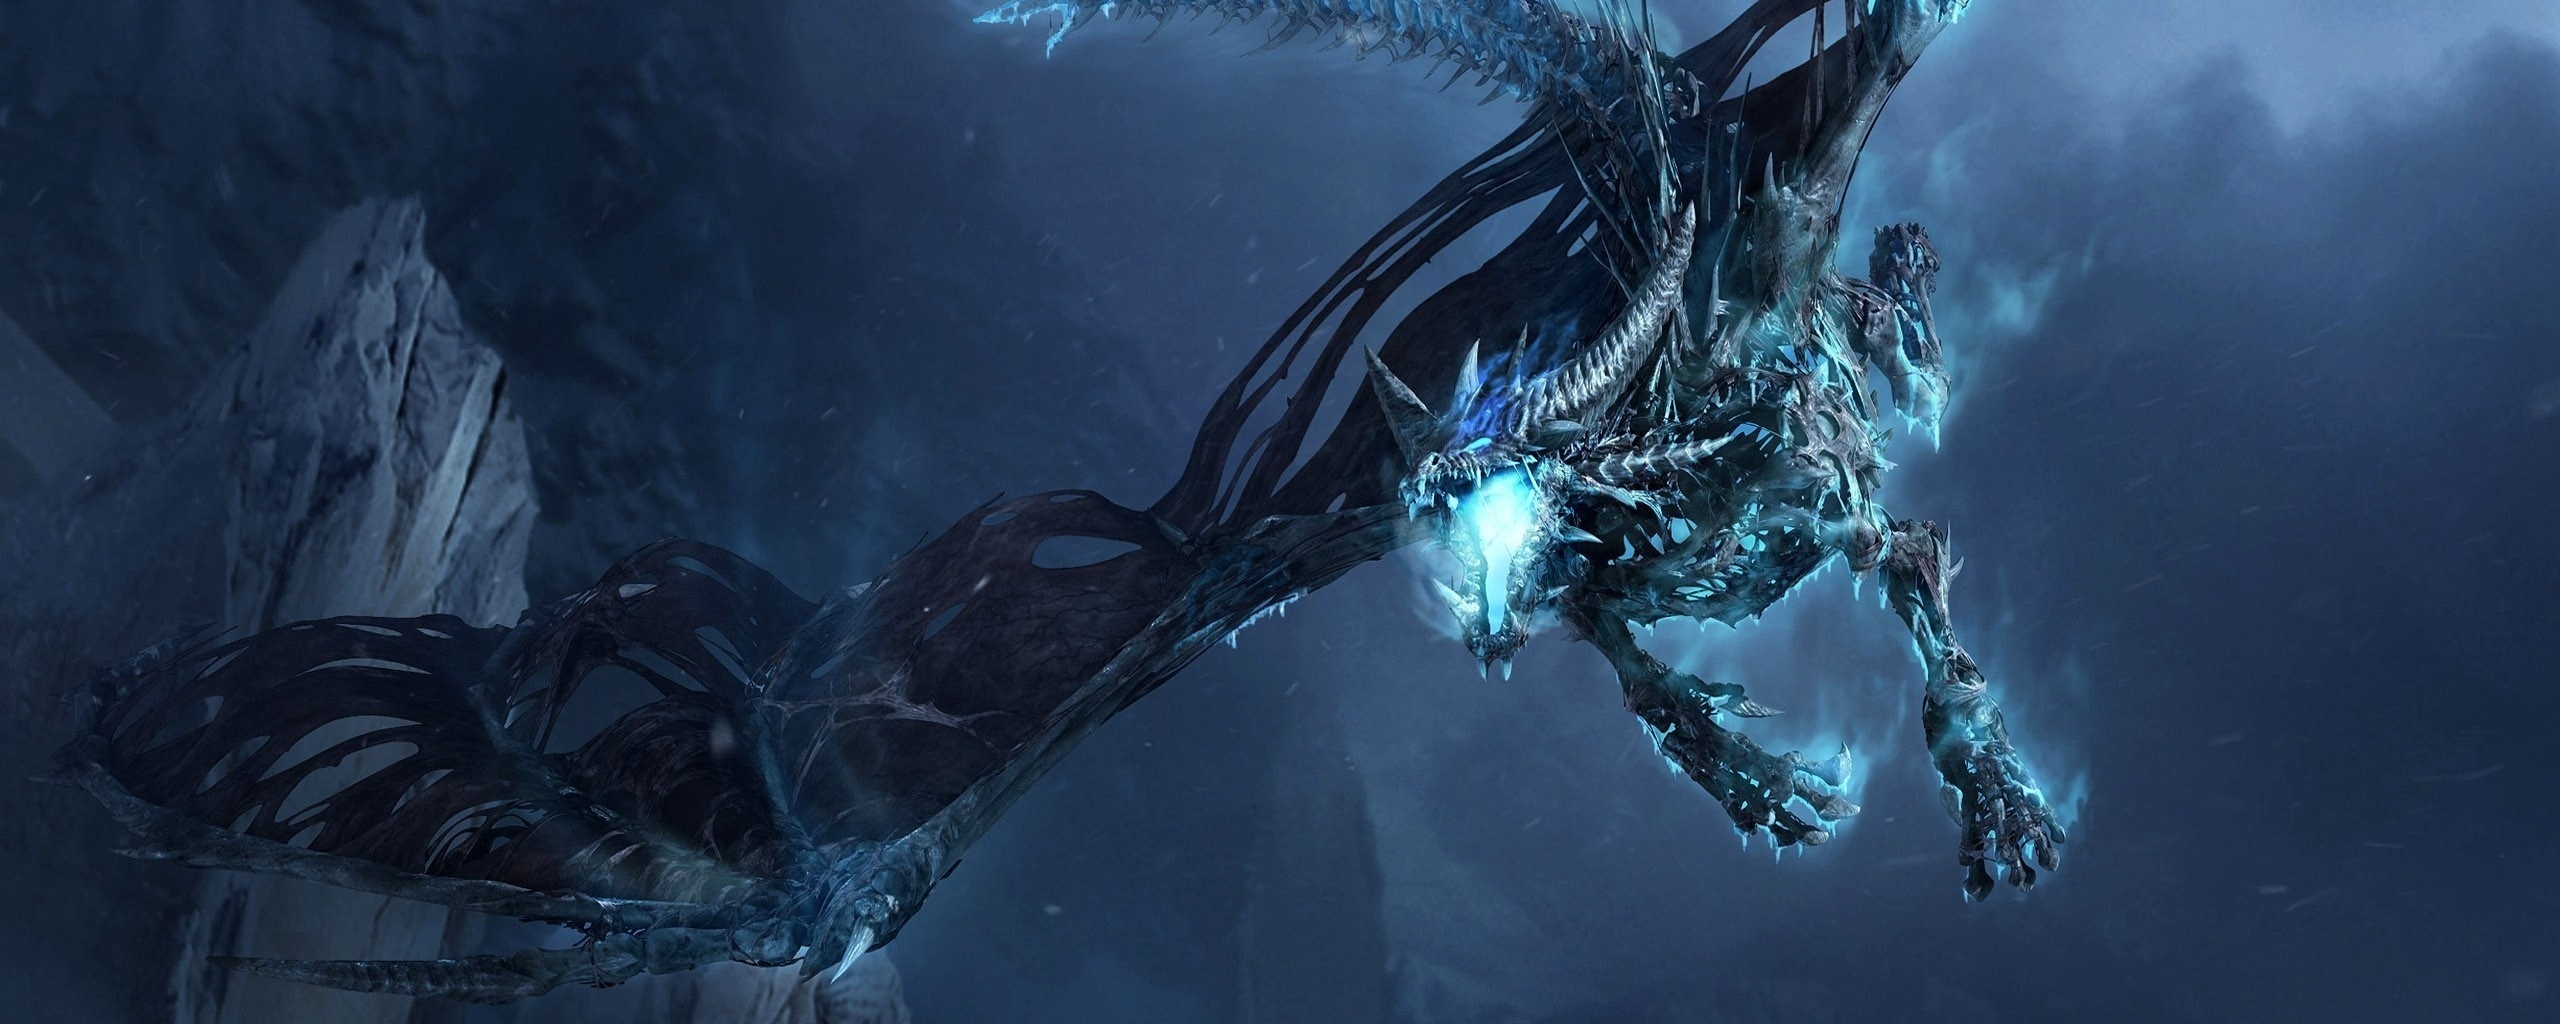 Wallpaper Dragon, Fly, Jaws, Rocks, Night - World Of Warcraft Dragon Age - HD Wallpaper 